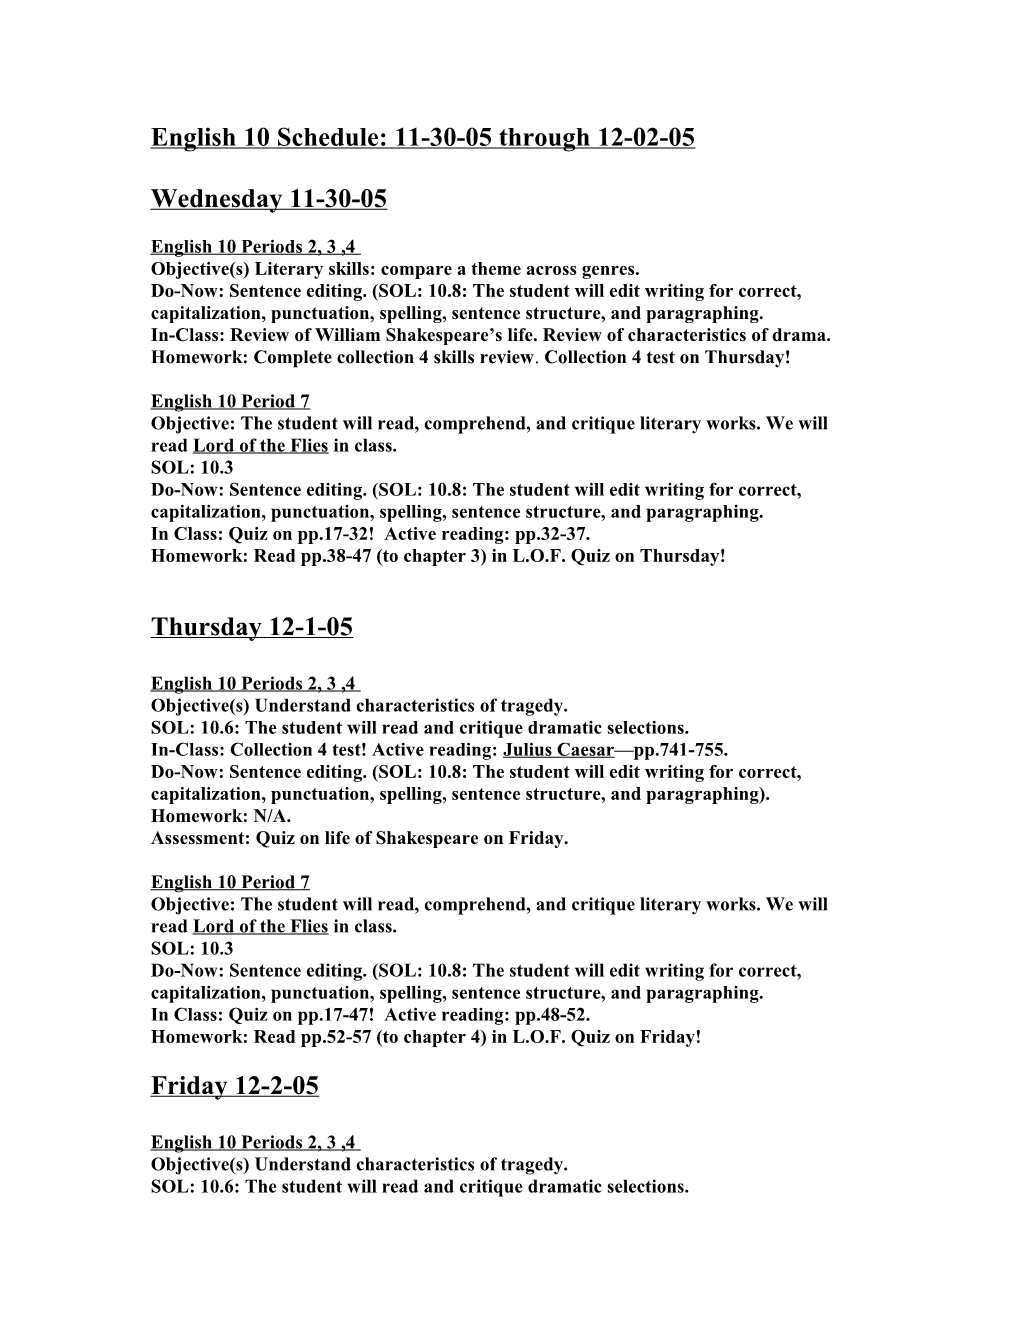 English 10 Weekly Schedule: 10-10-05 Through 10-14-05